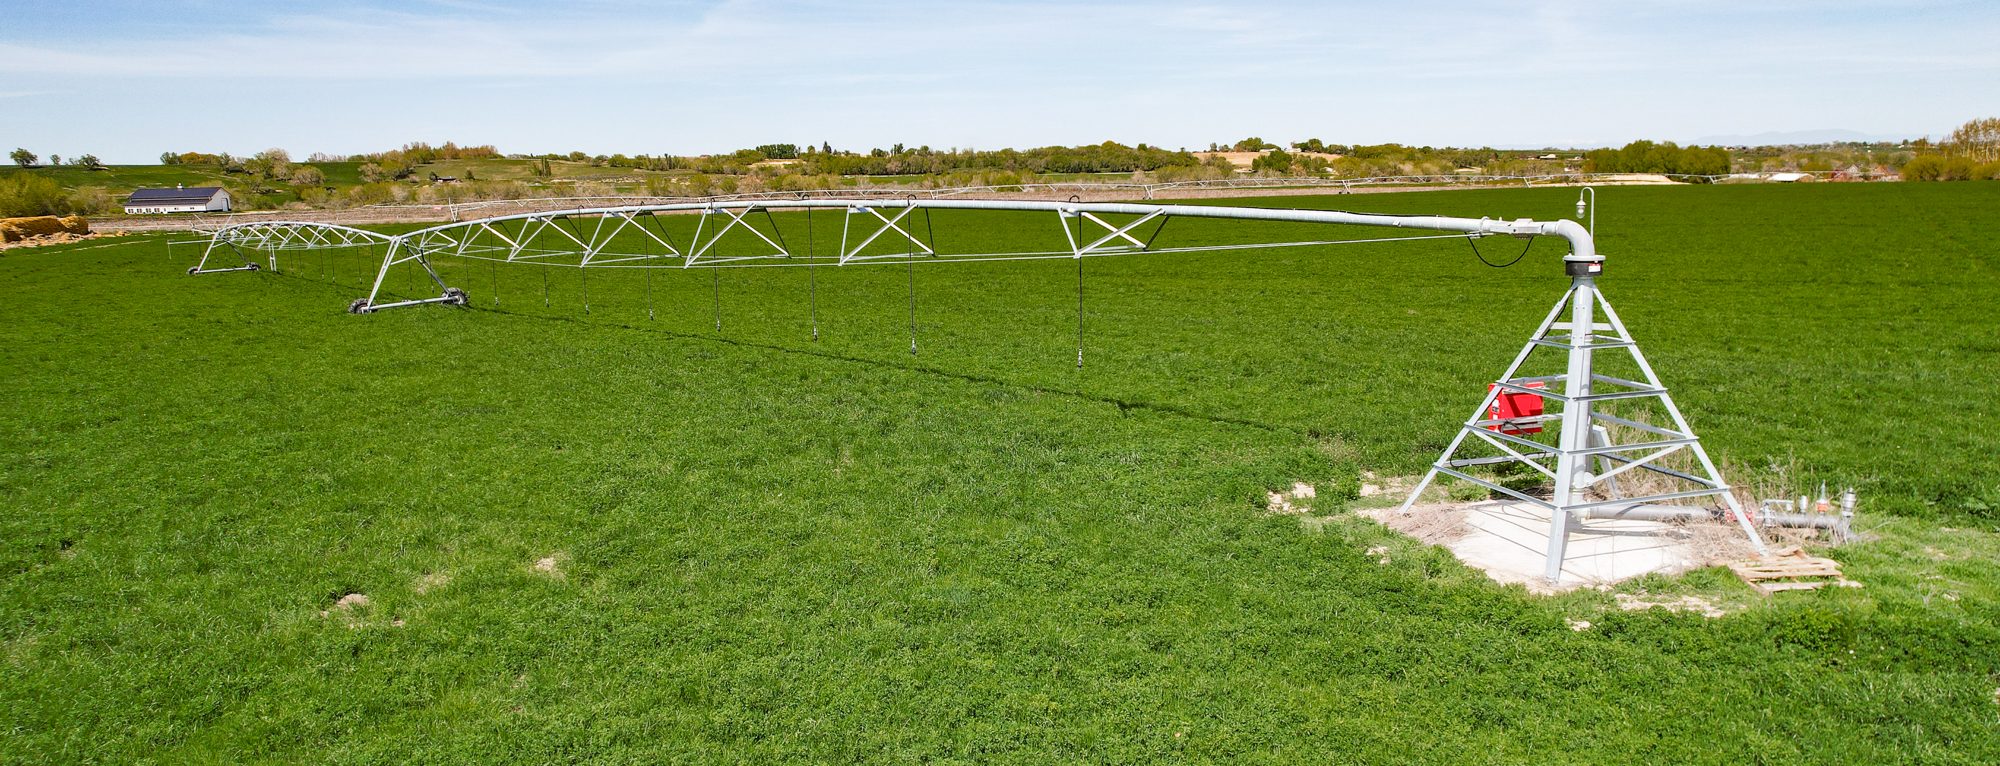 Homedale Alfalfa Farm irrigation pivot